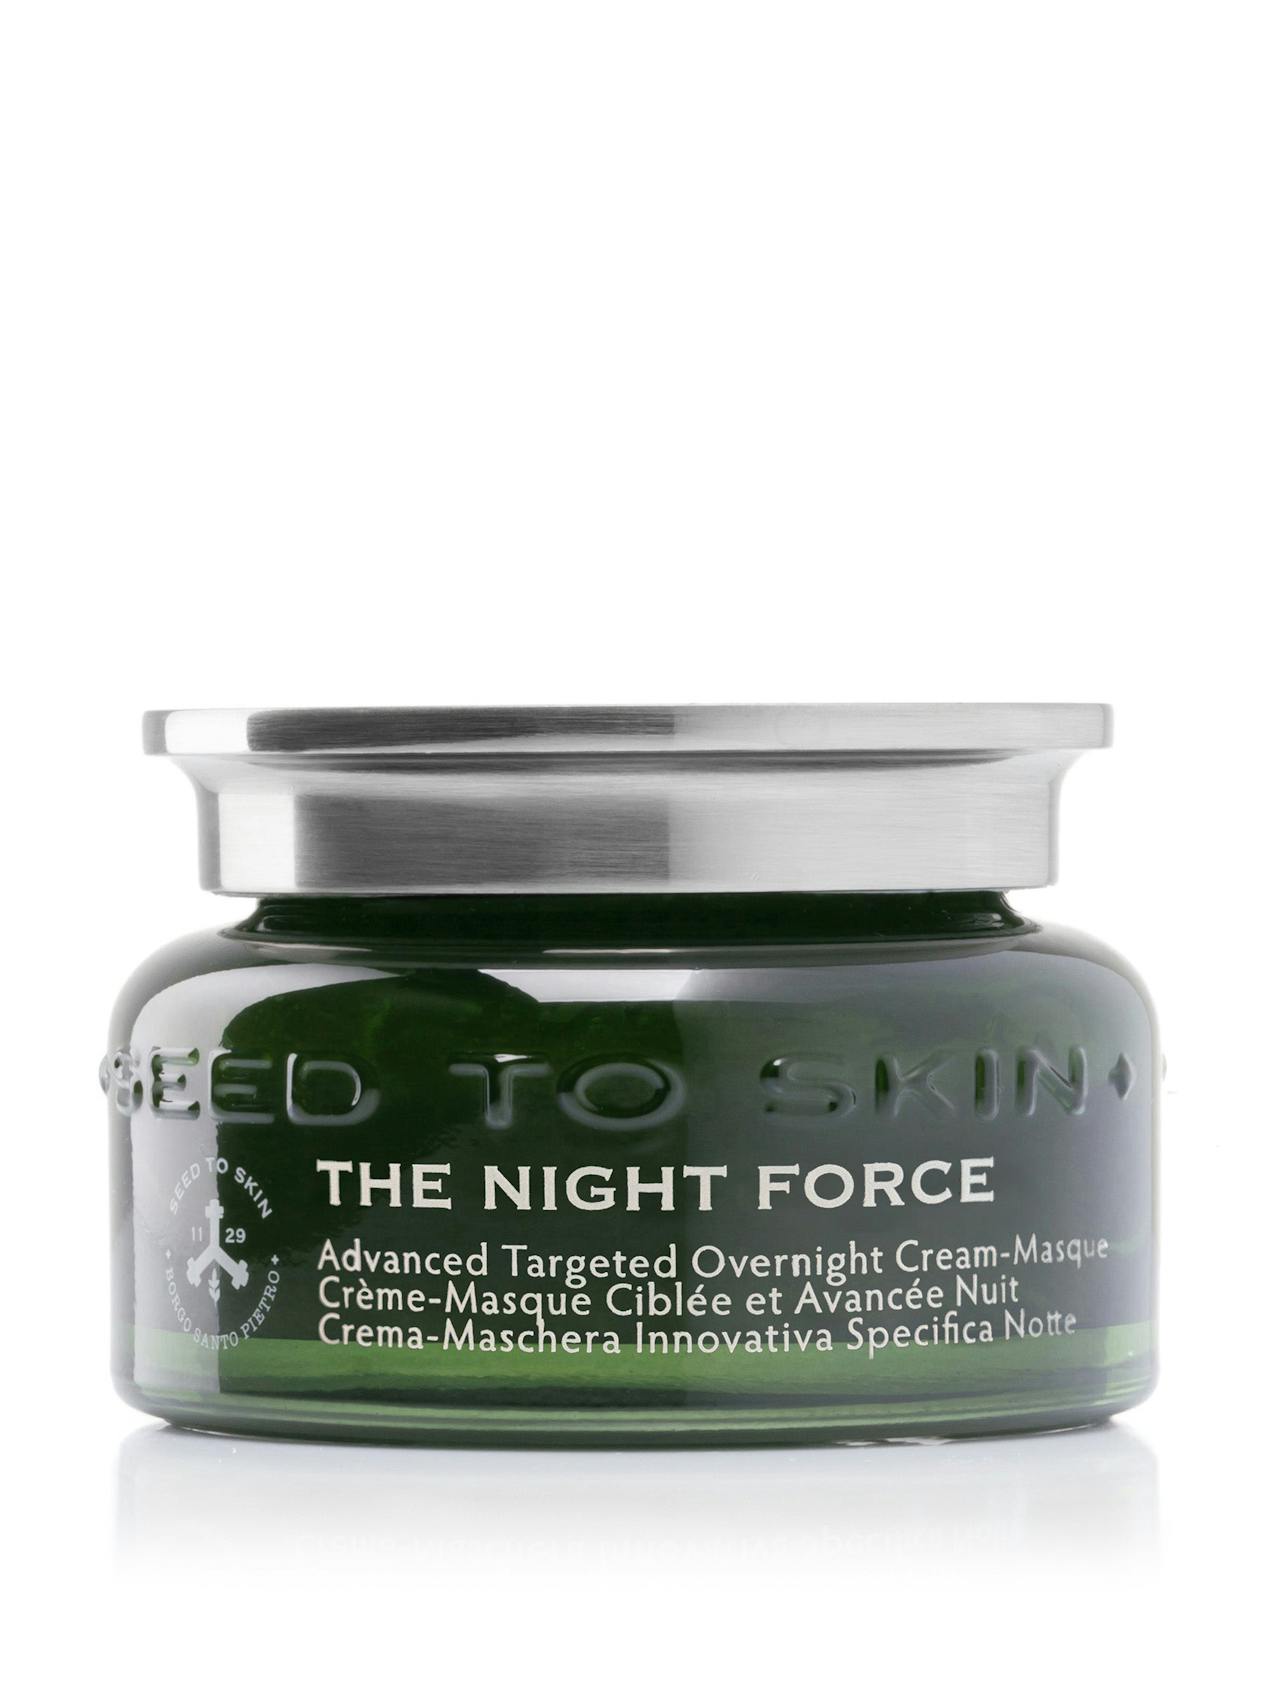 The Night Force cream